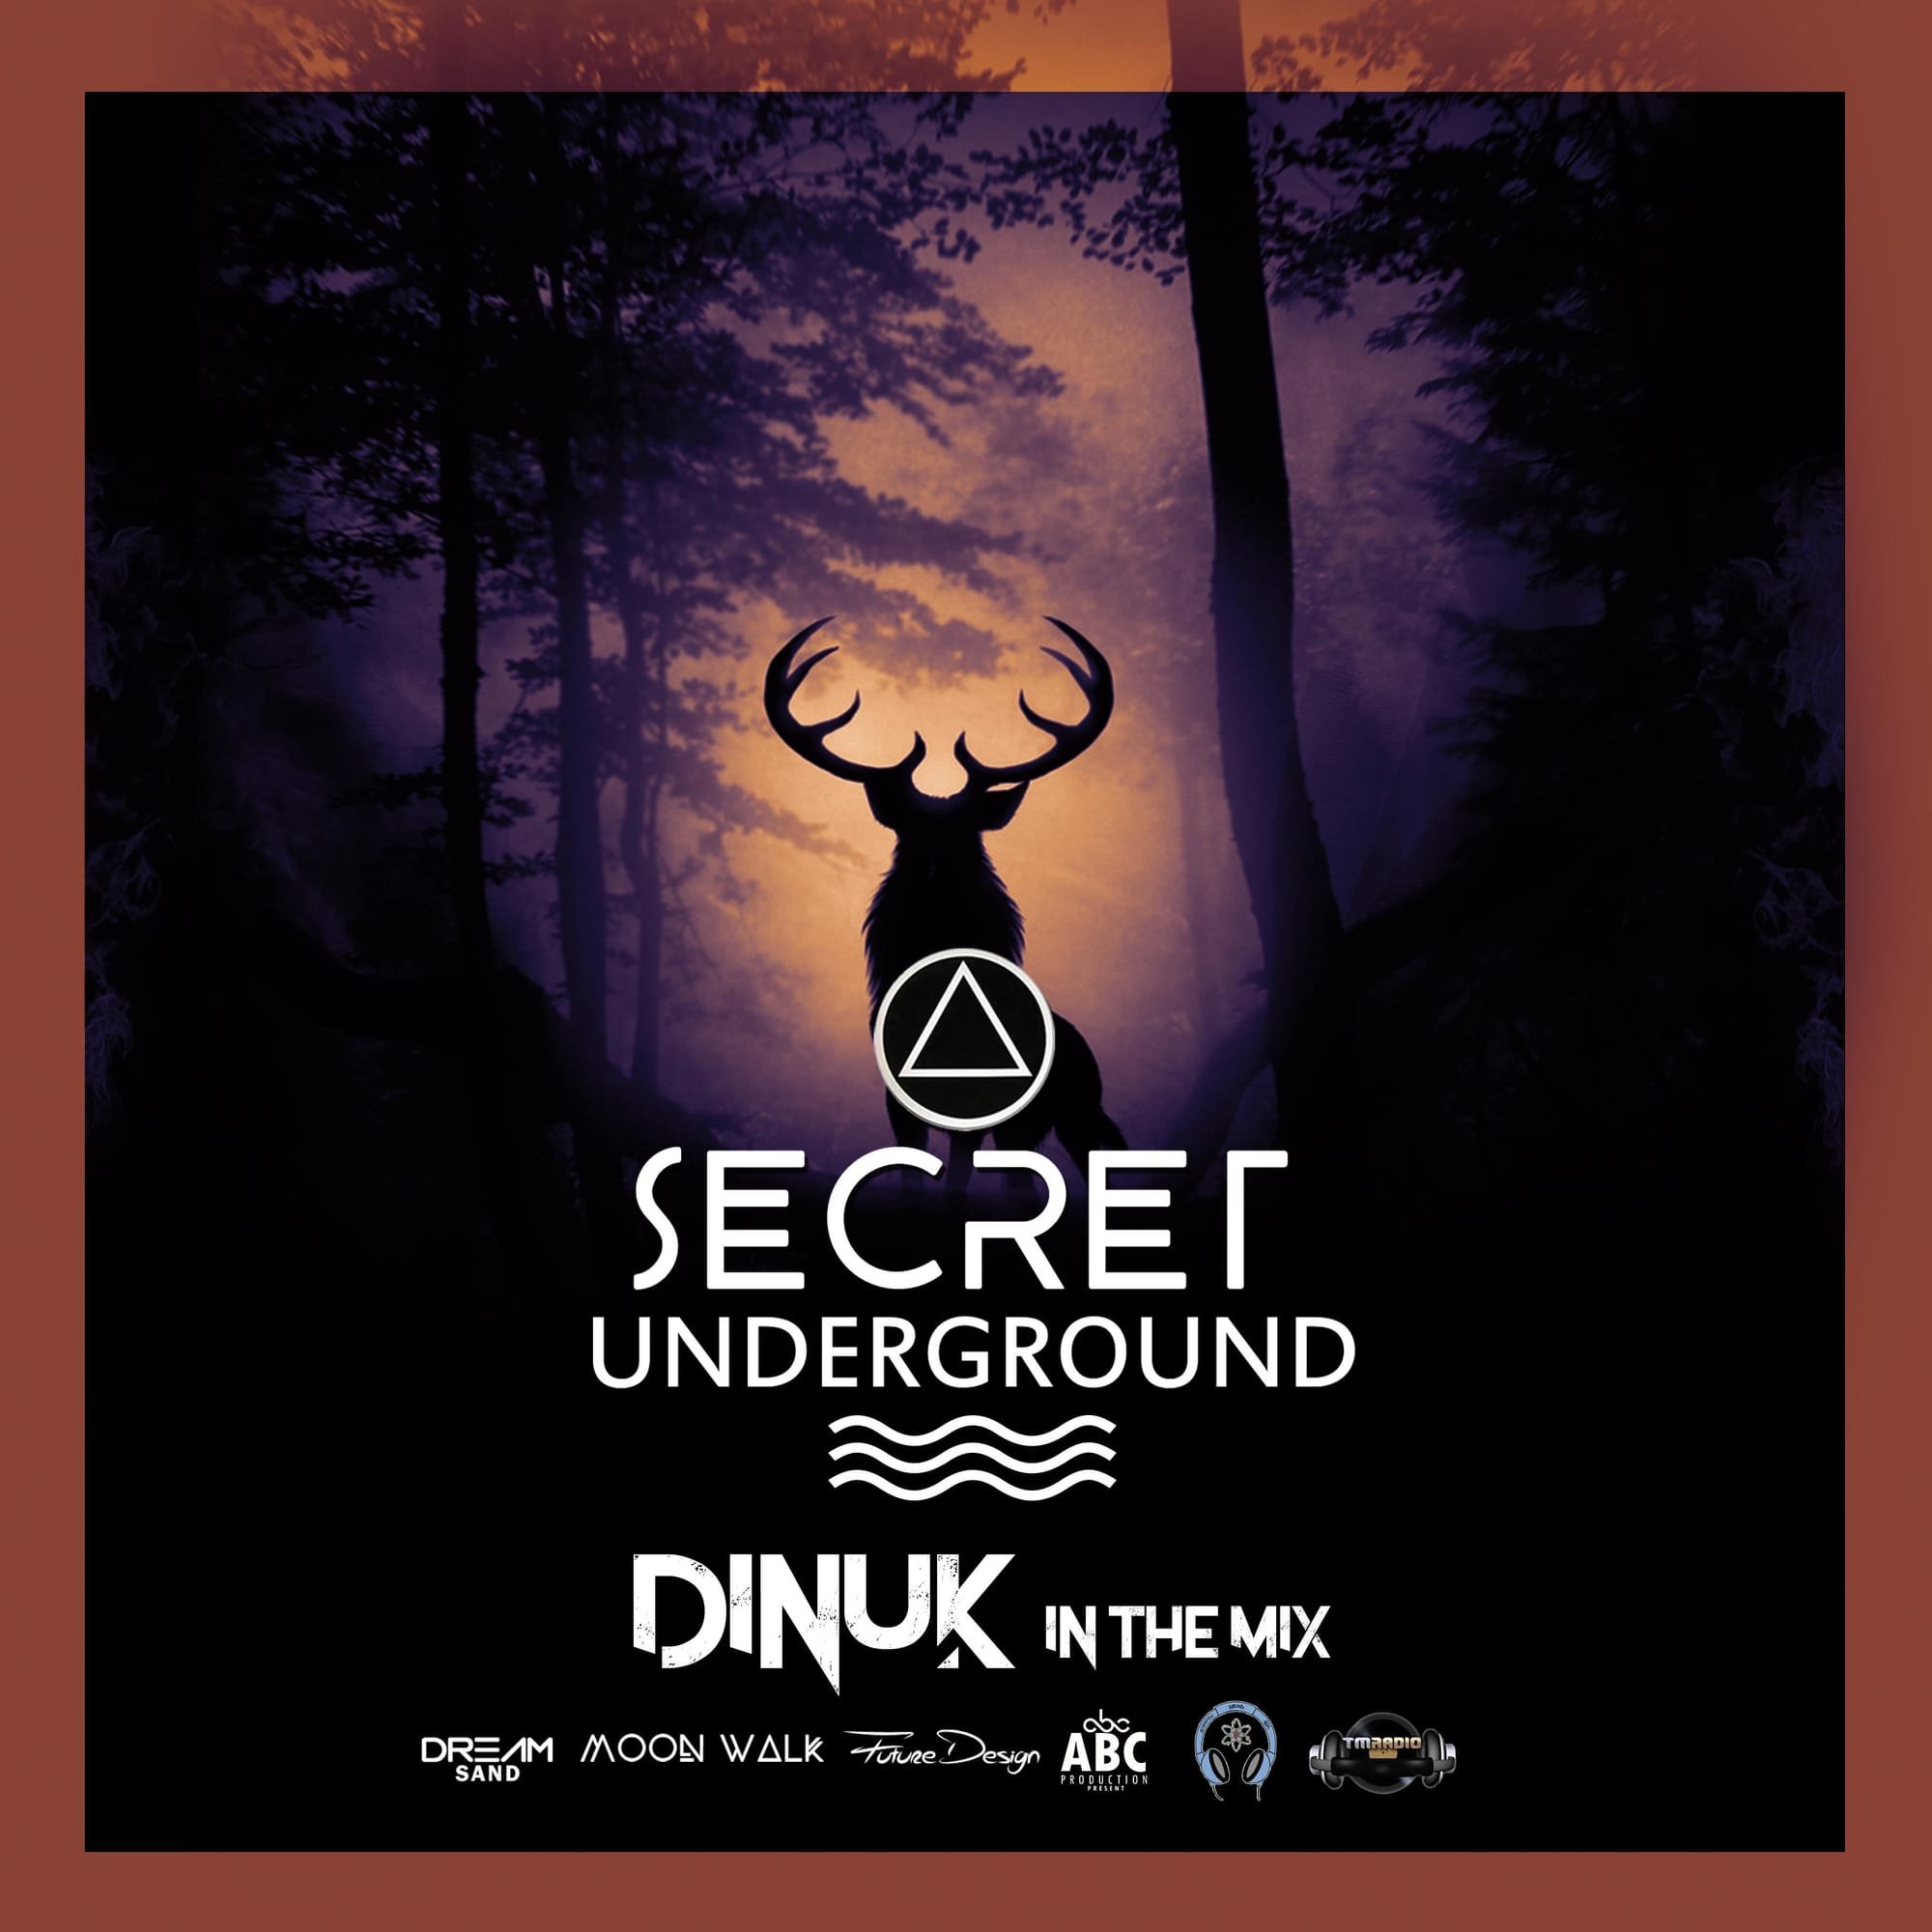 Secret Underground announce playlist and guest DJ DINUK.